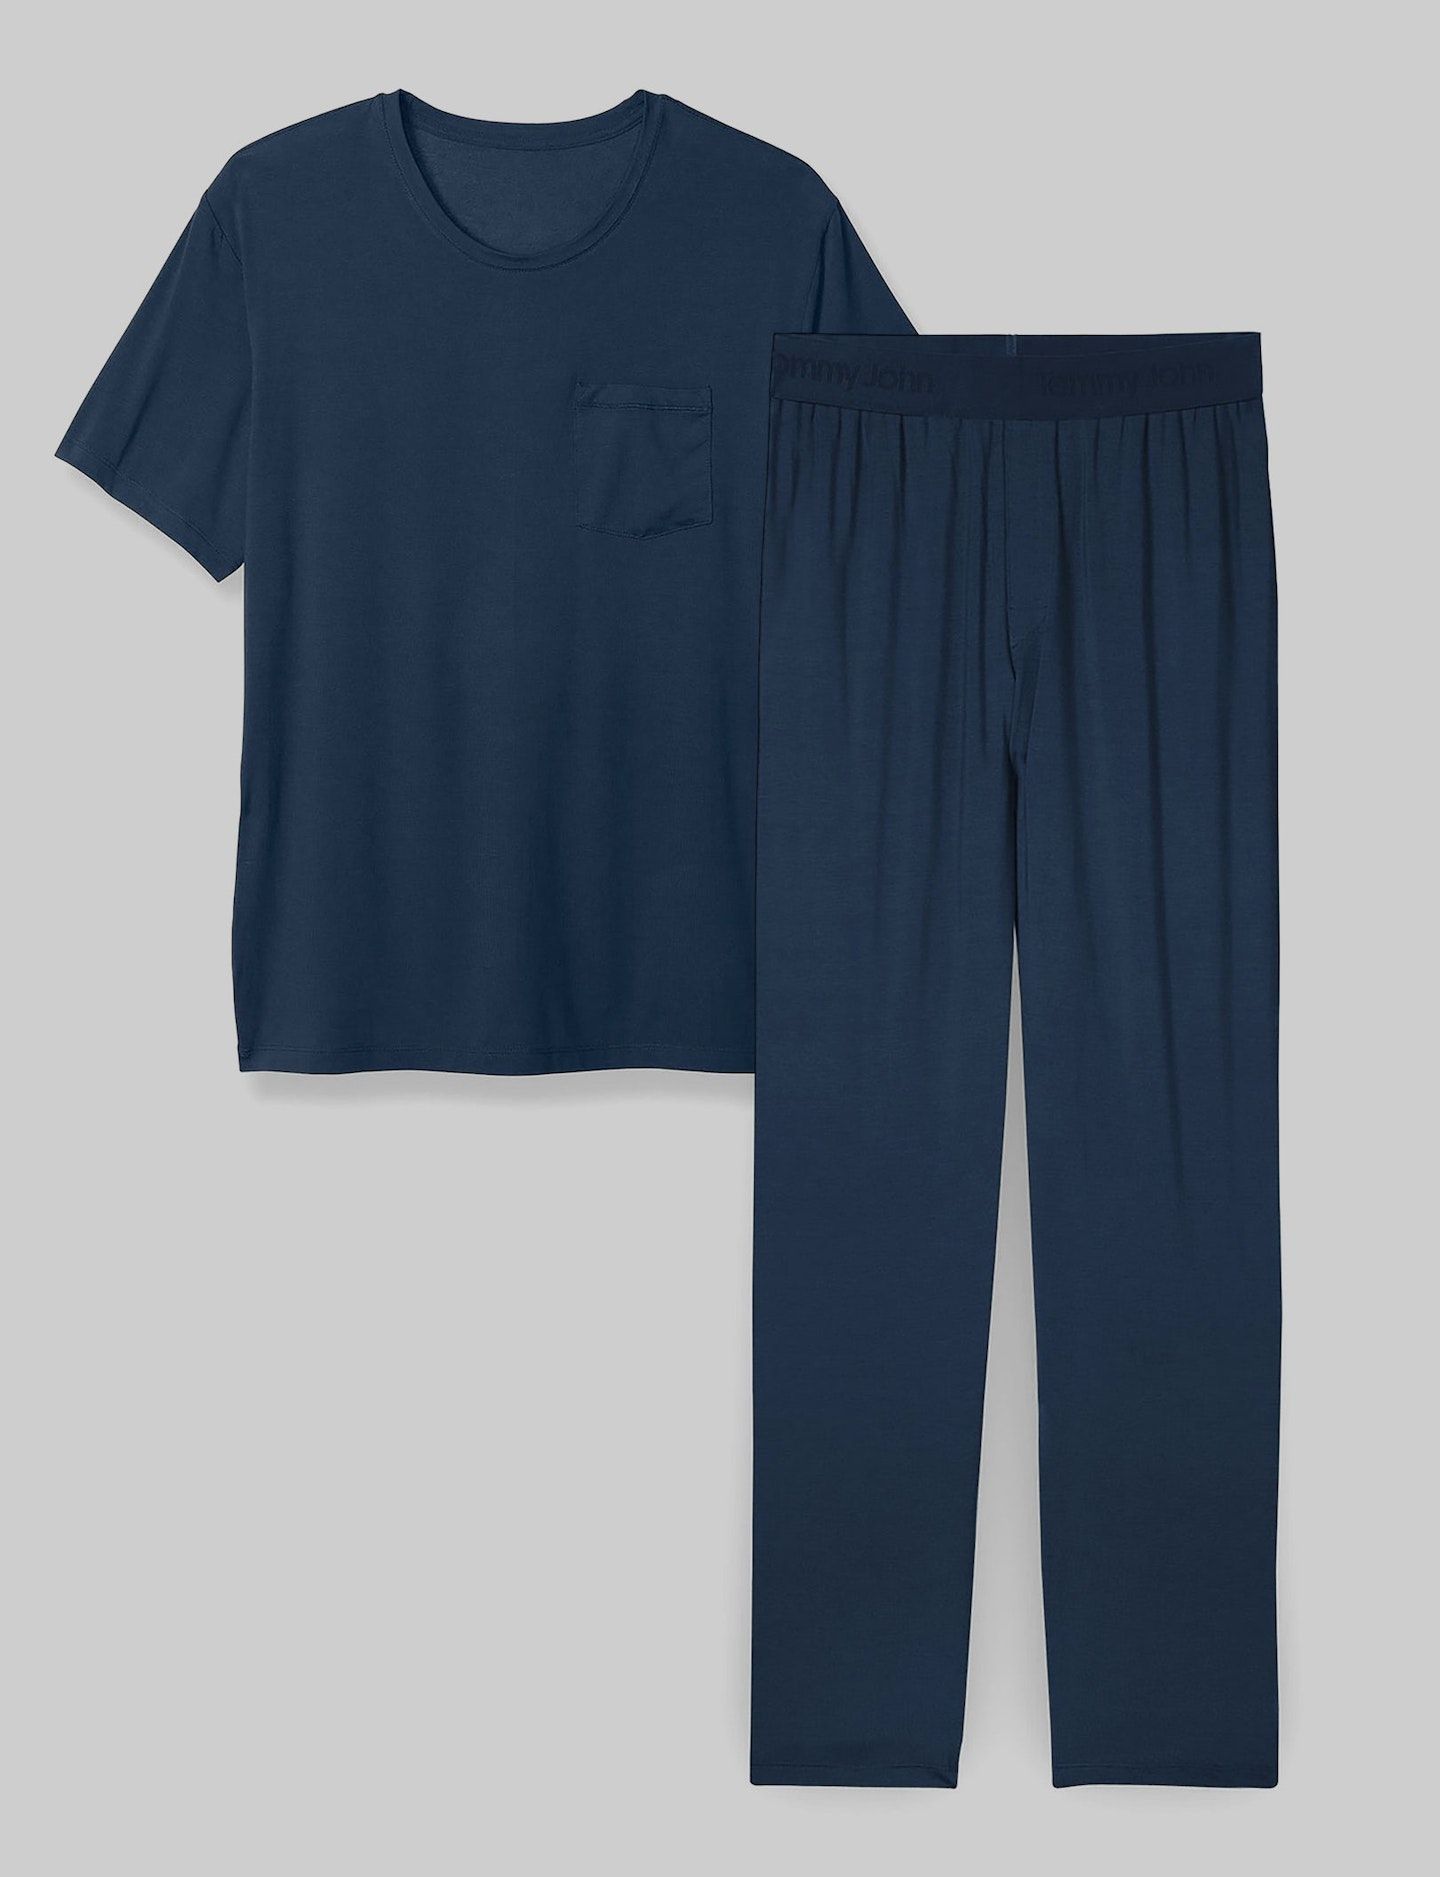 Second Skin Pajama Pocket Tee & Pant Set | Tommy John